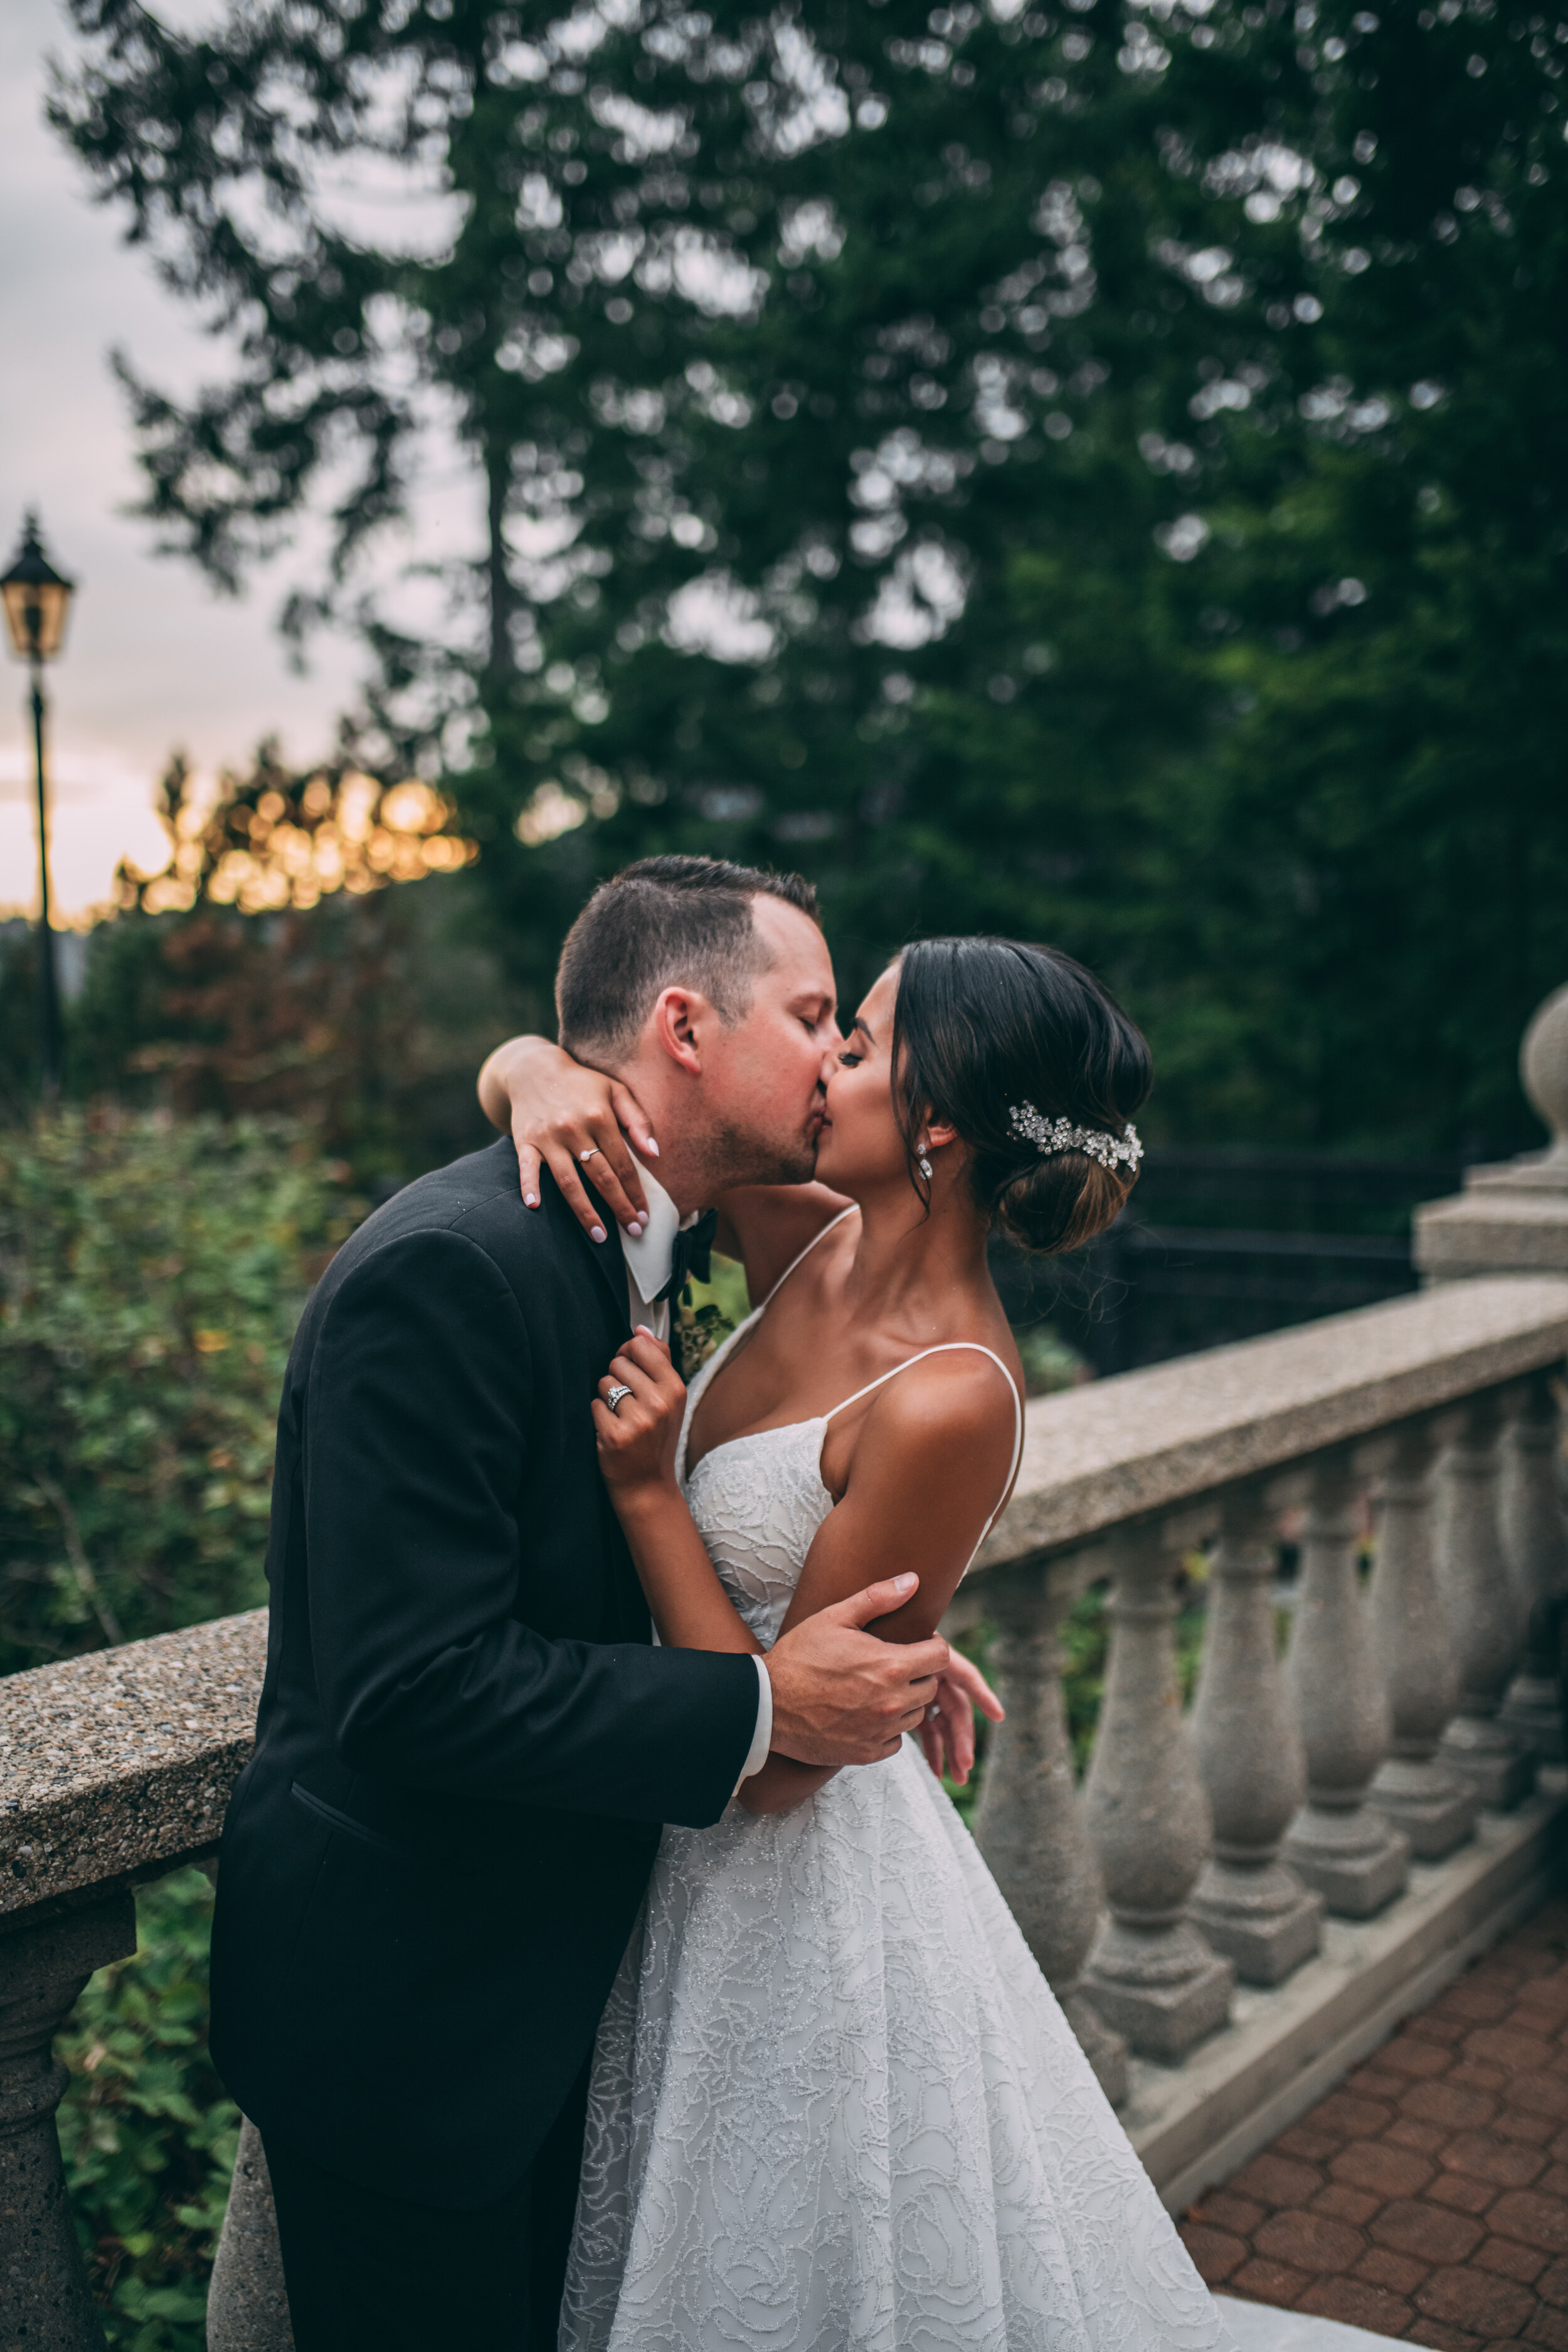 Natasha & Lee Sneak Peeks - August 31, 2019 Swaneset Wedding-3335.jpg